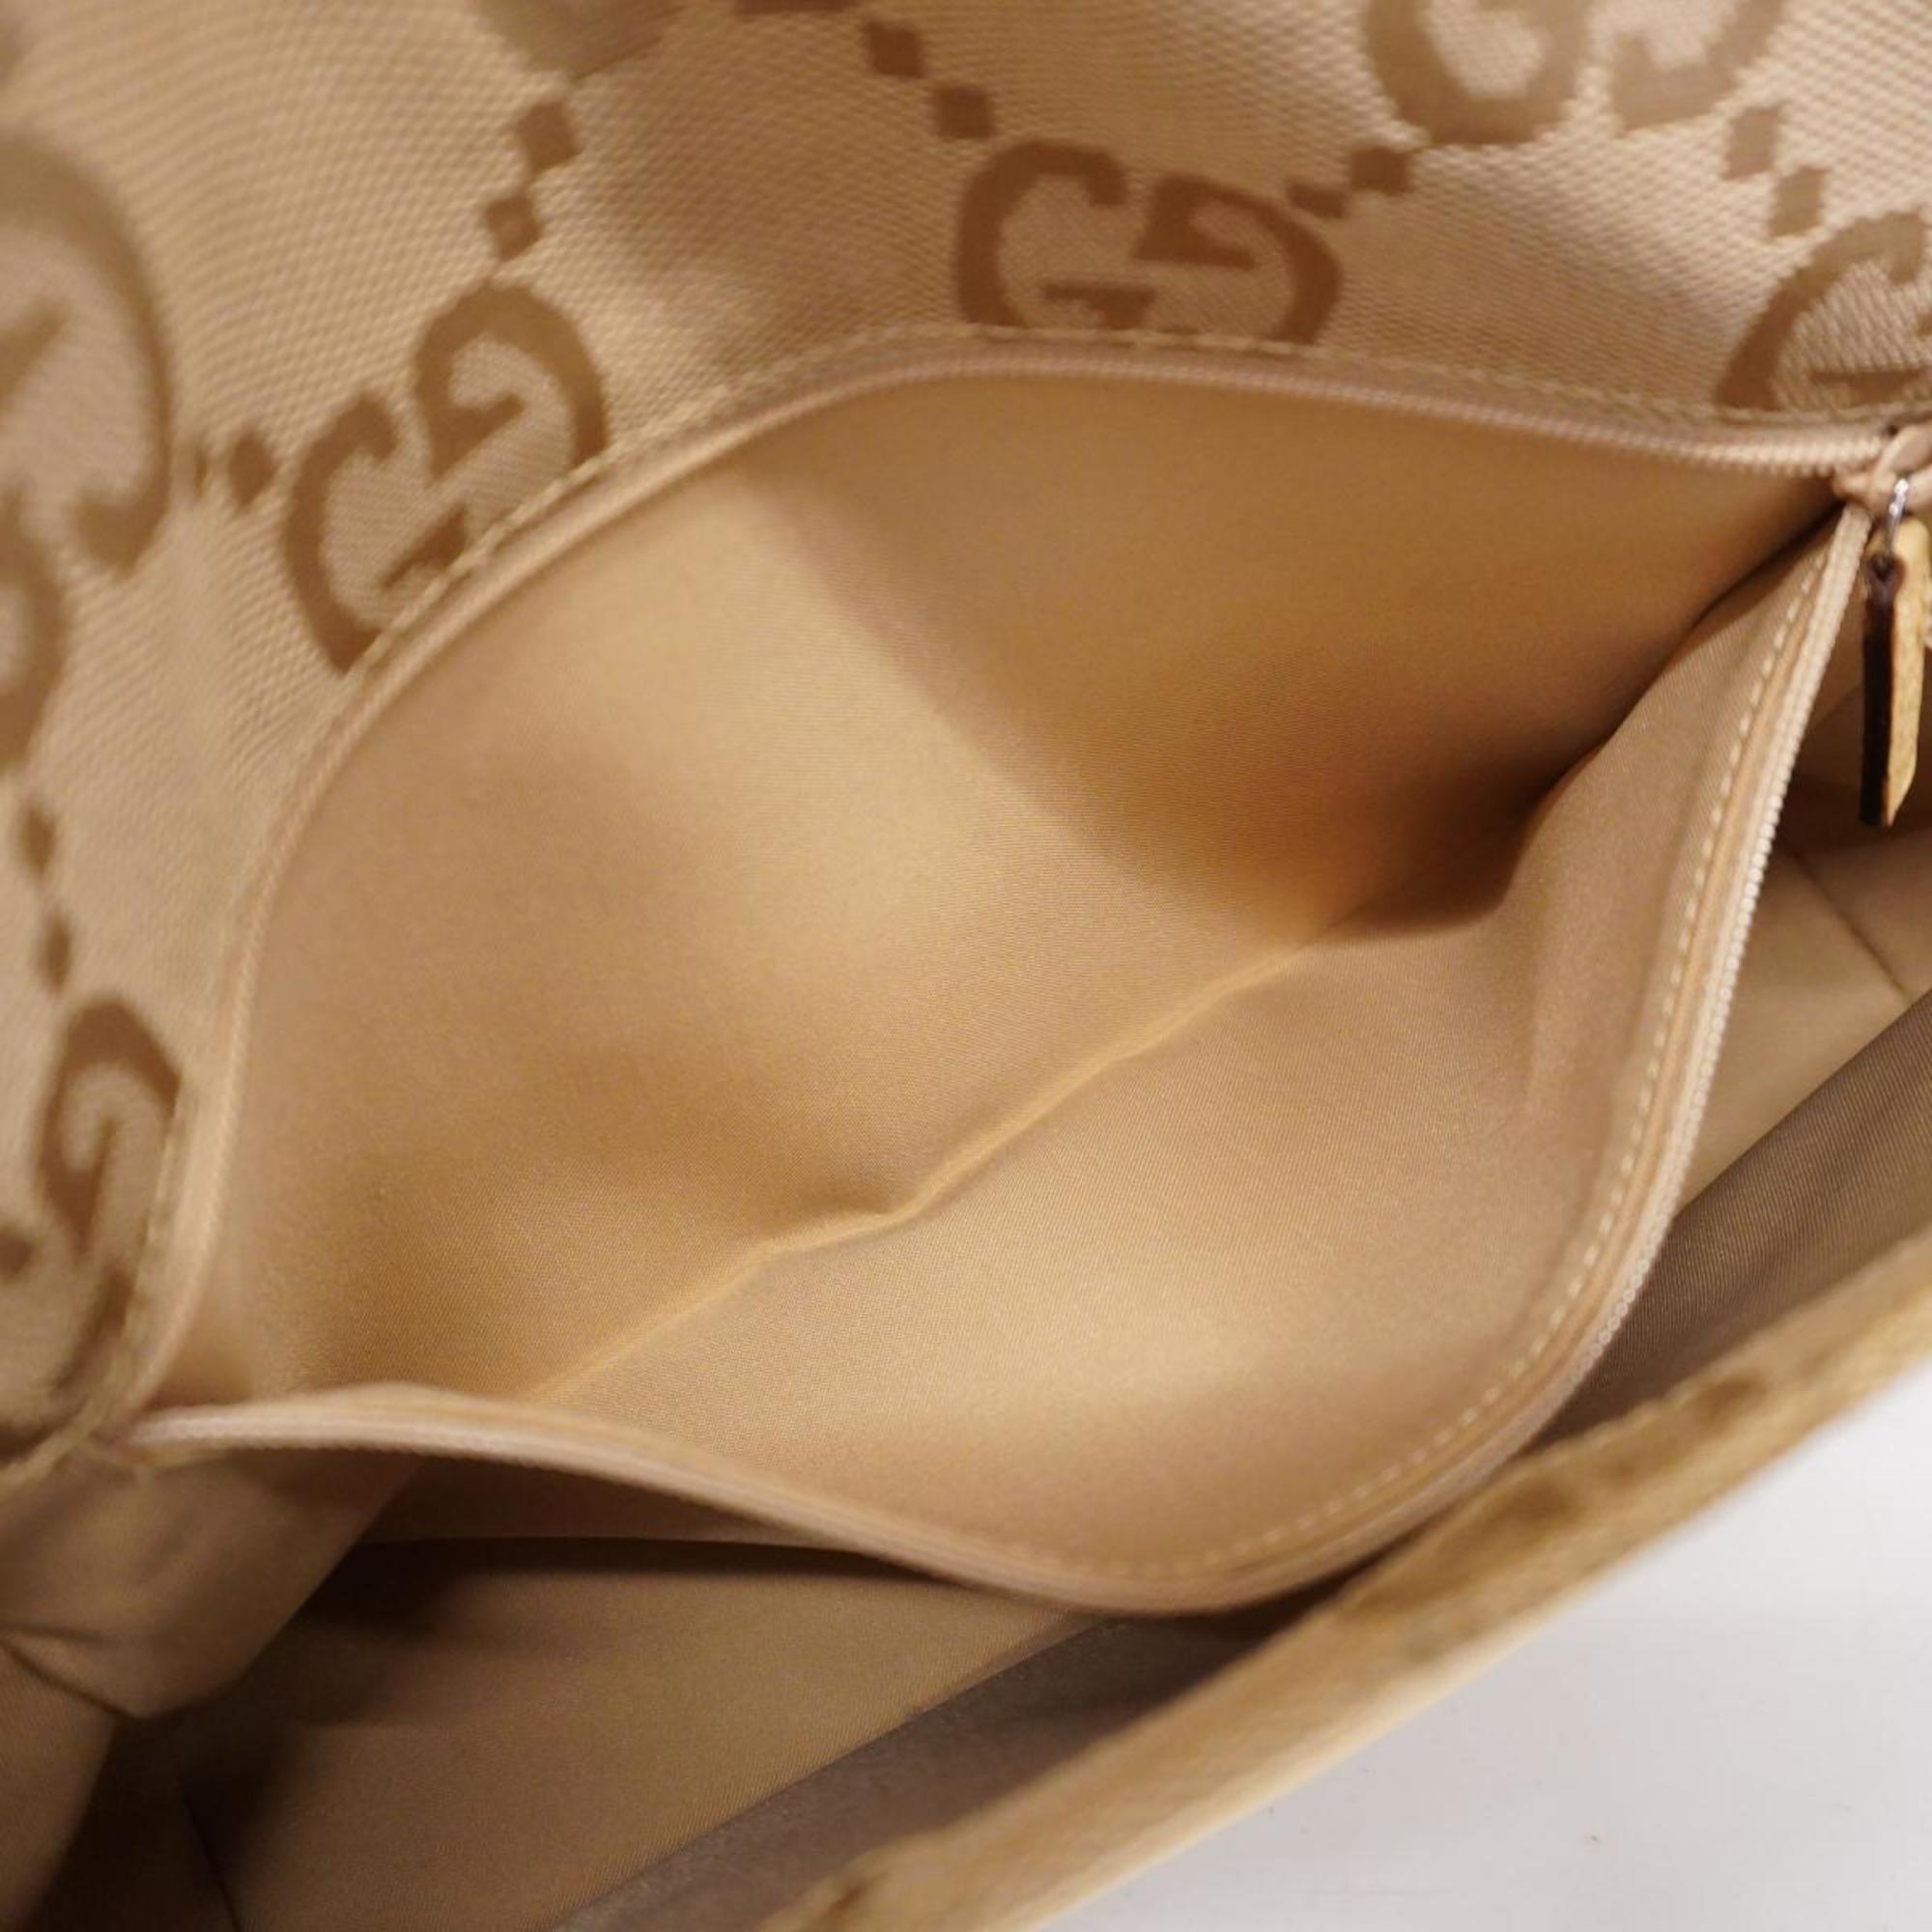 Gucci Shoulder Bag Jumbo GG 001 3805 Canvas Beige Women's